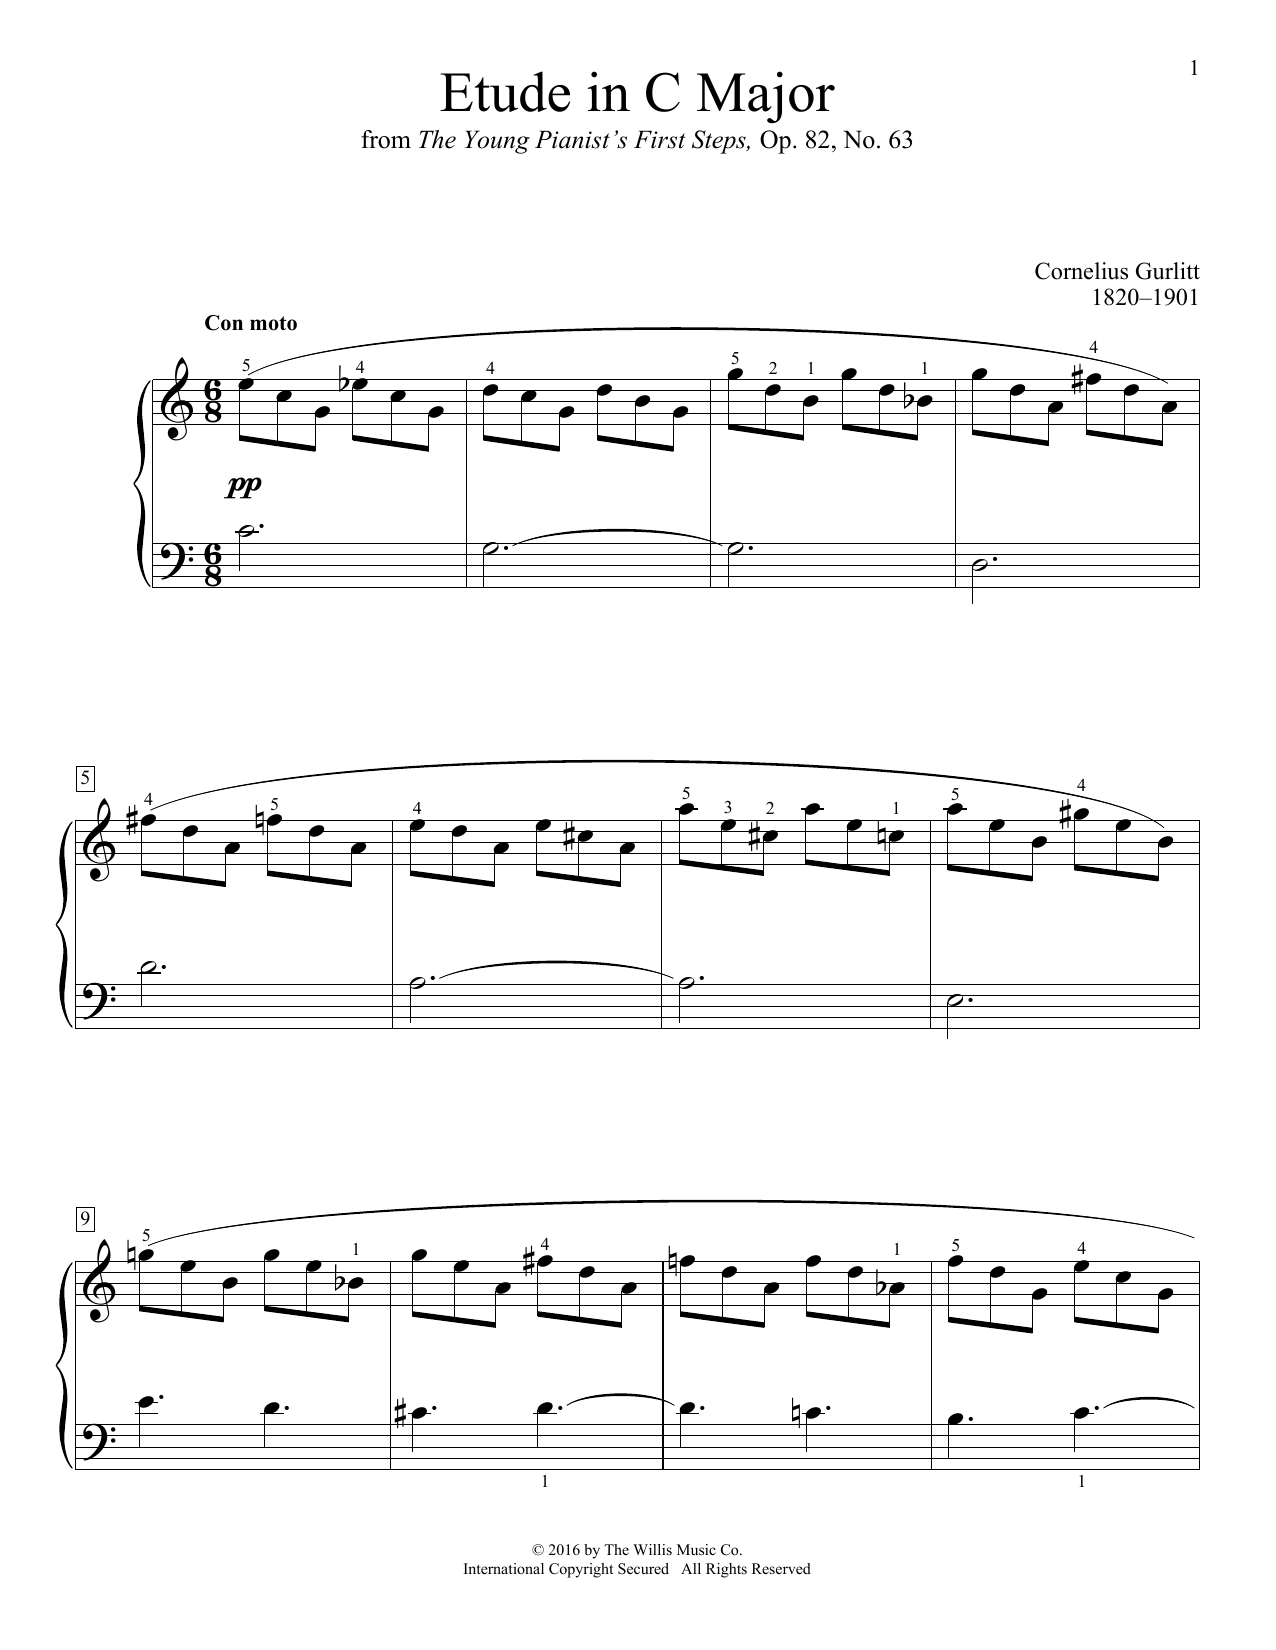 Cornelius Gurlitt Etude In C Major sheet music notes and chords arranged for Educational Piano